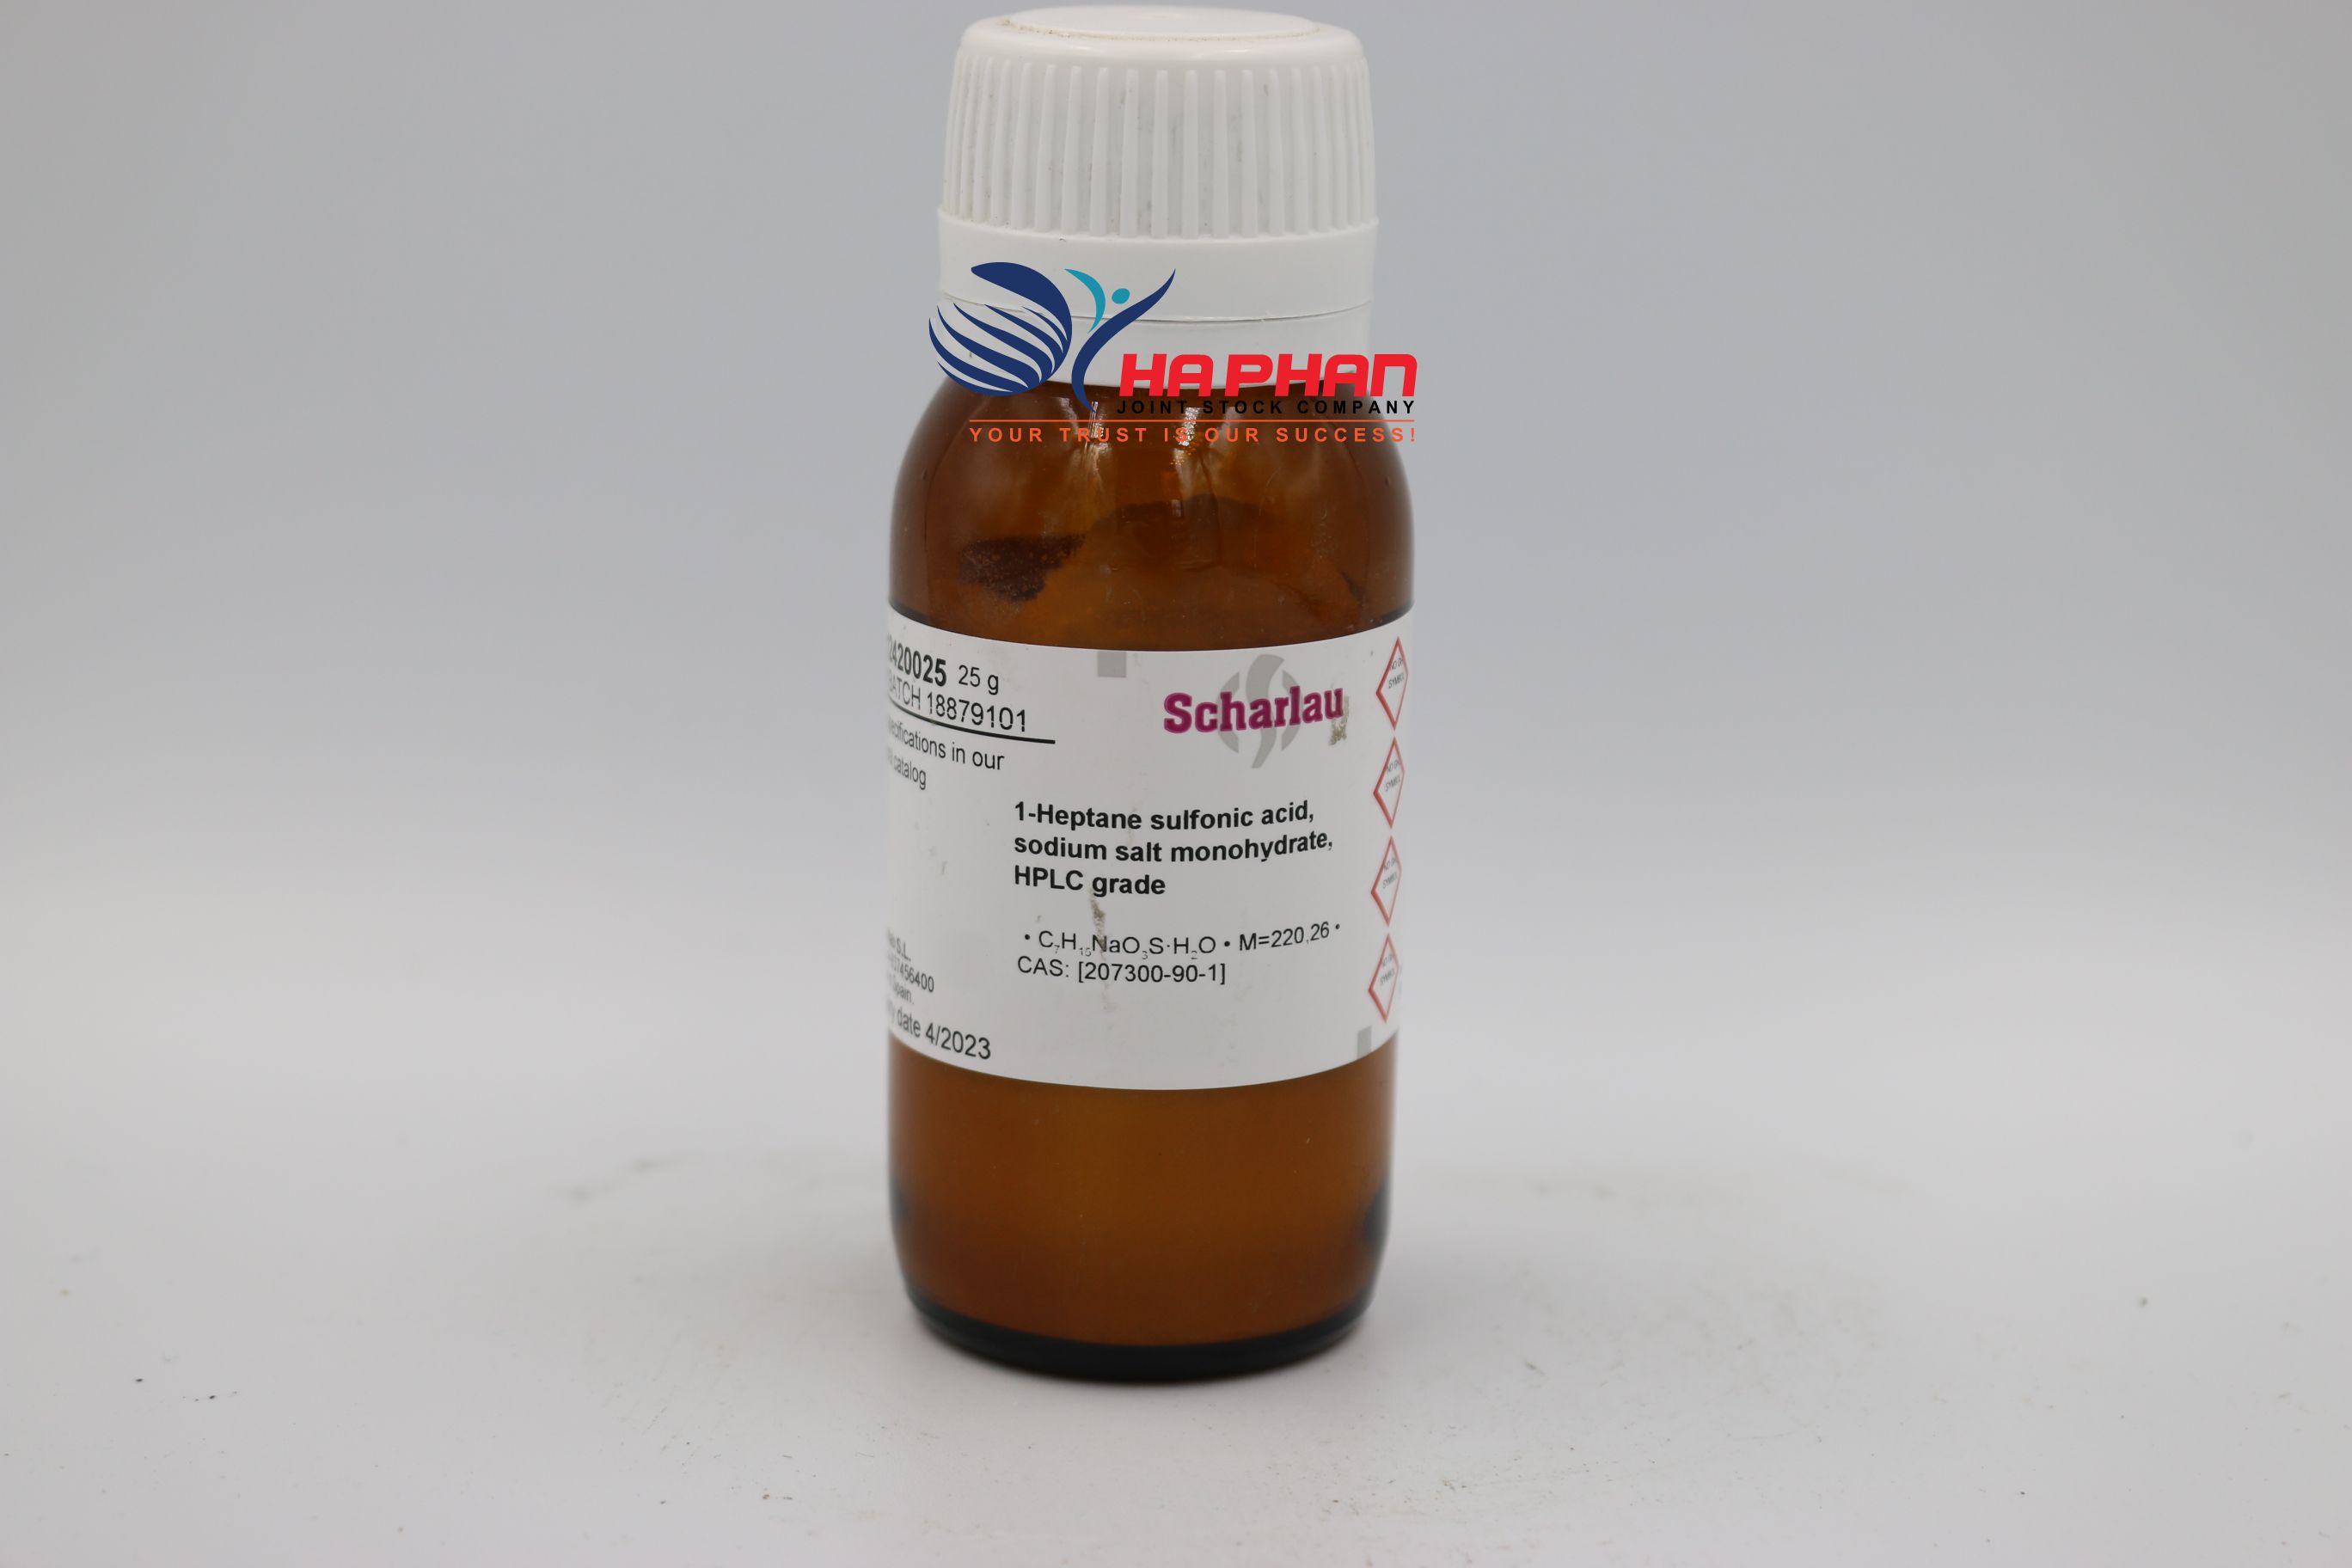 1-Heptane sulfonic acid, sodium salt monohydrate, HPLC grade